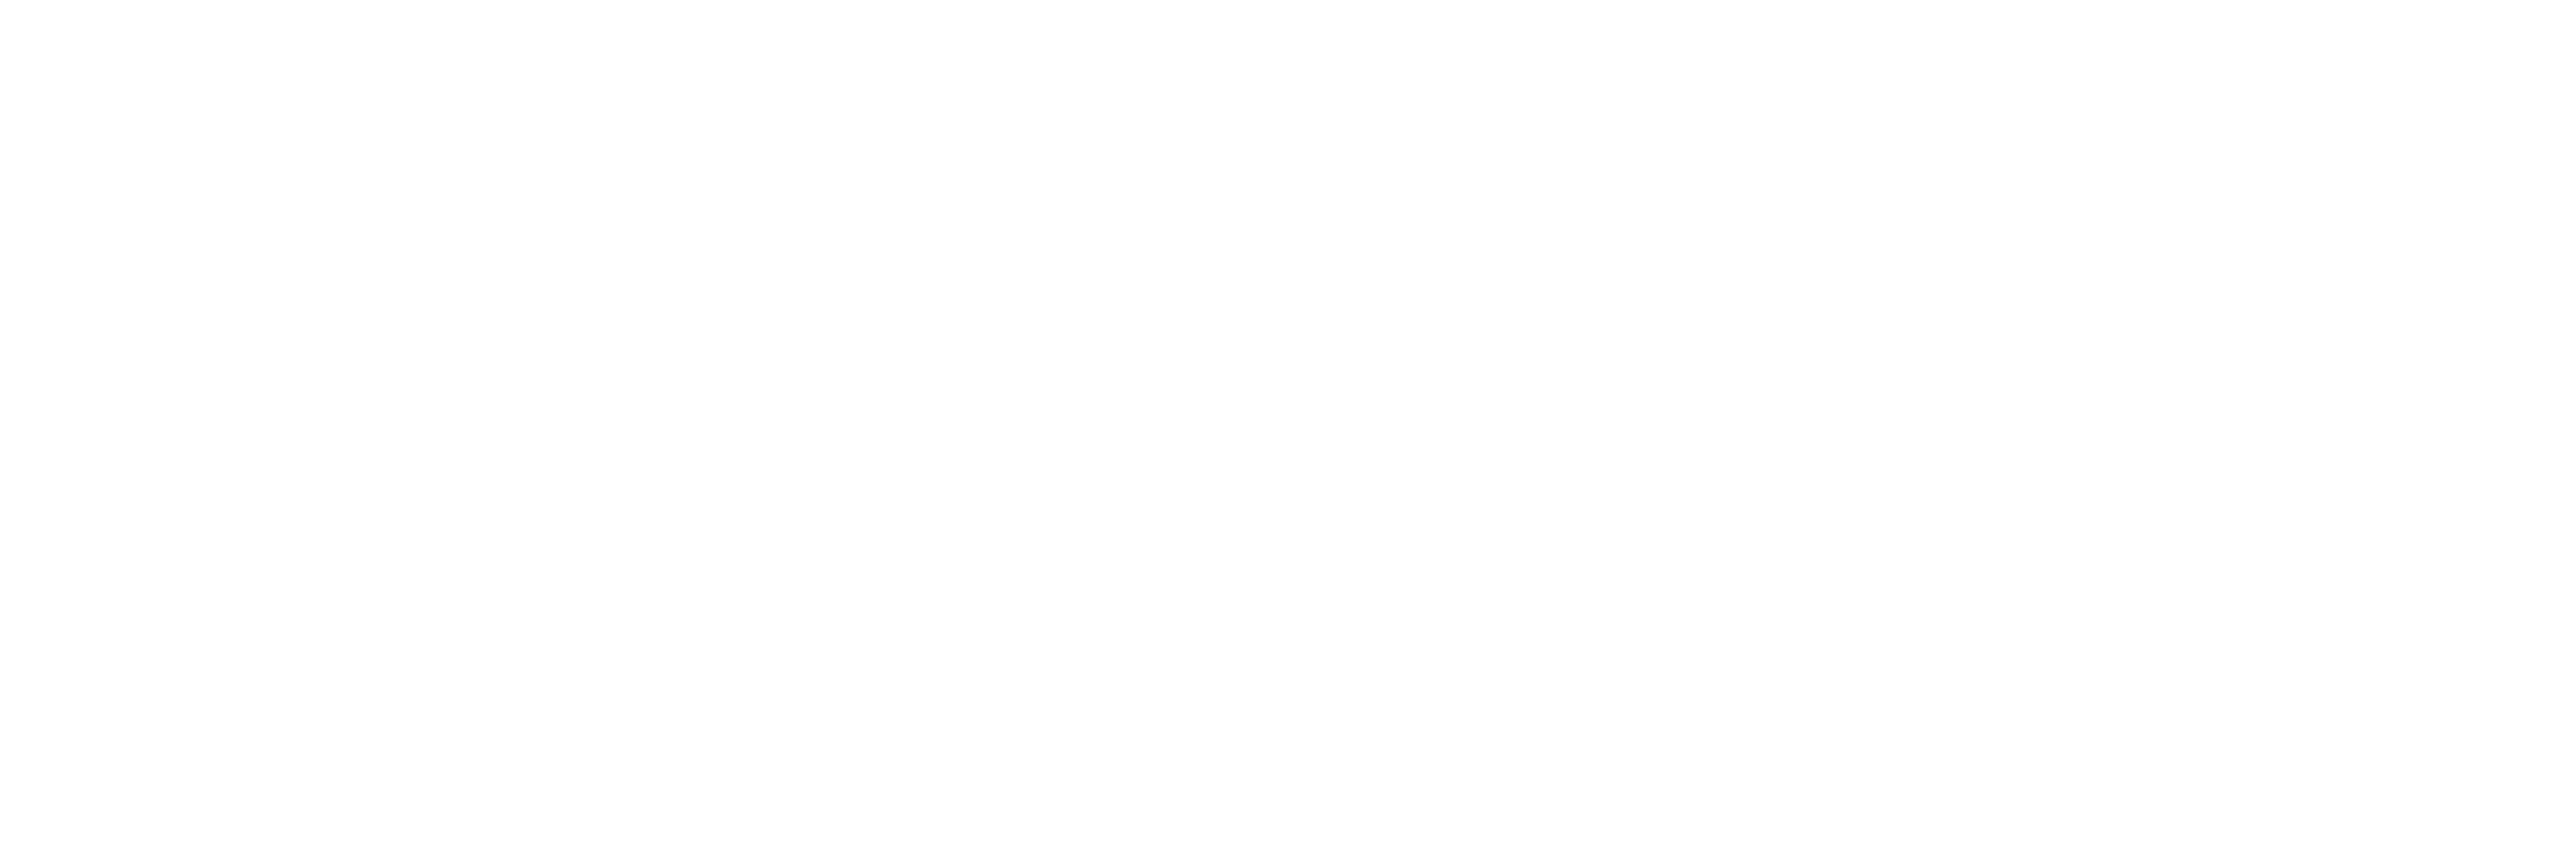 Stalwart Communities Africa, white logo